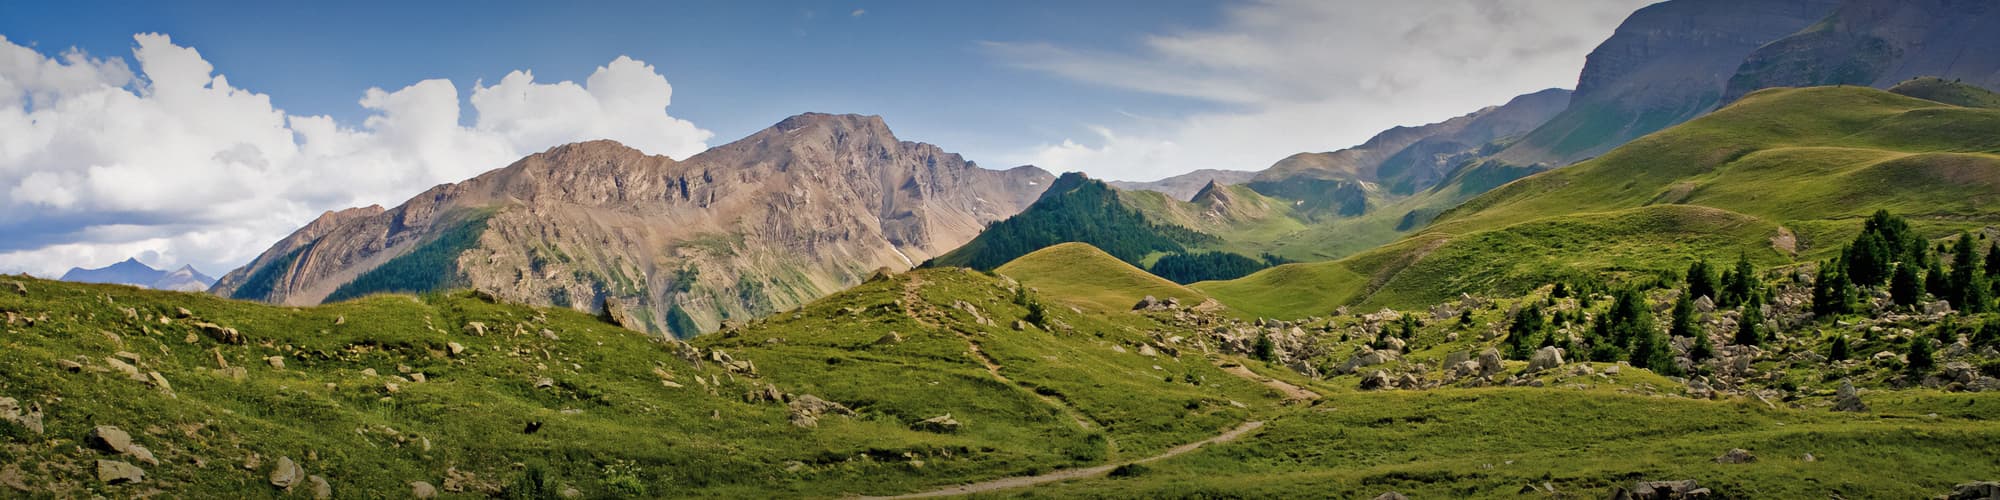 Raquette Alpes du Sud © Uolir / Adobe Stock